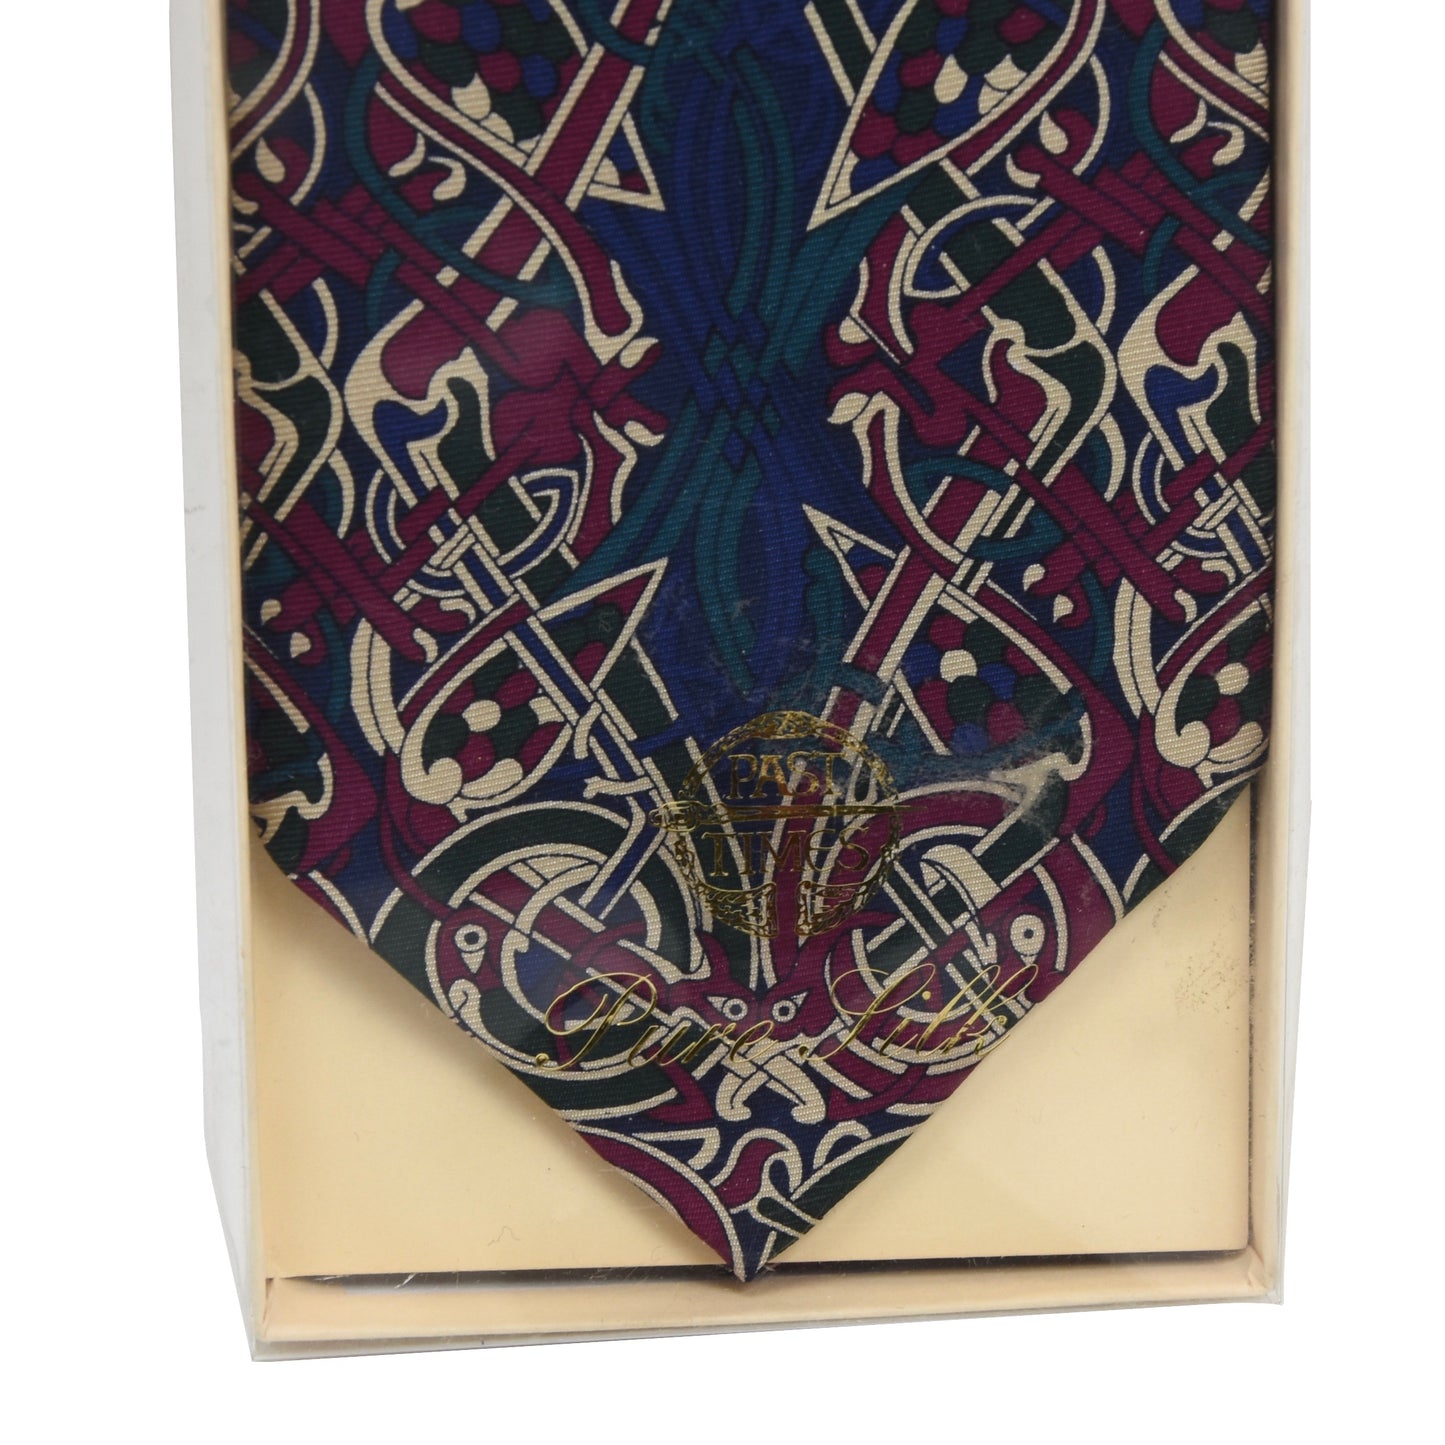 NEW Past Times Celtic Print Silk Tie